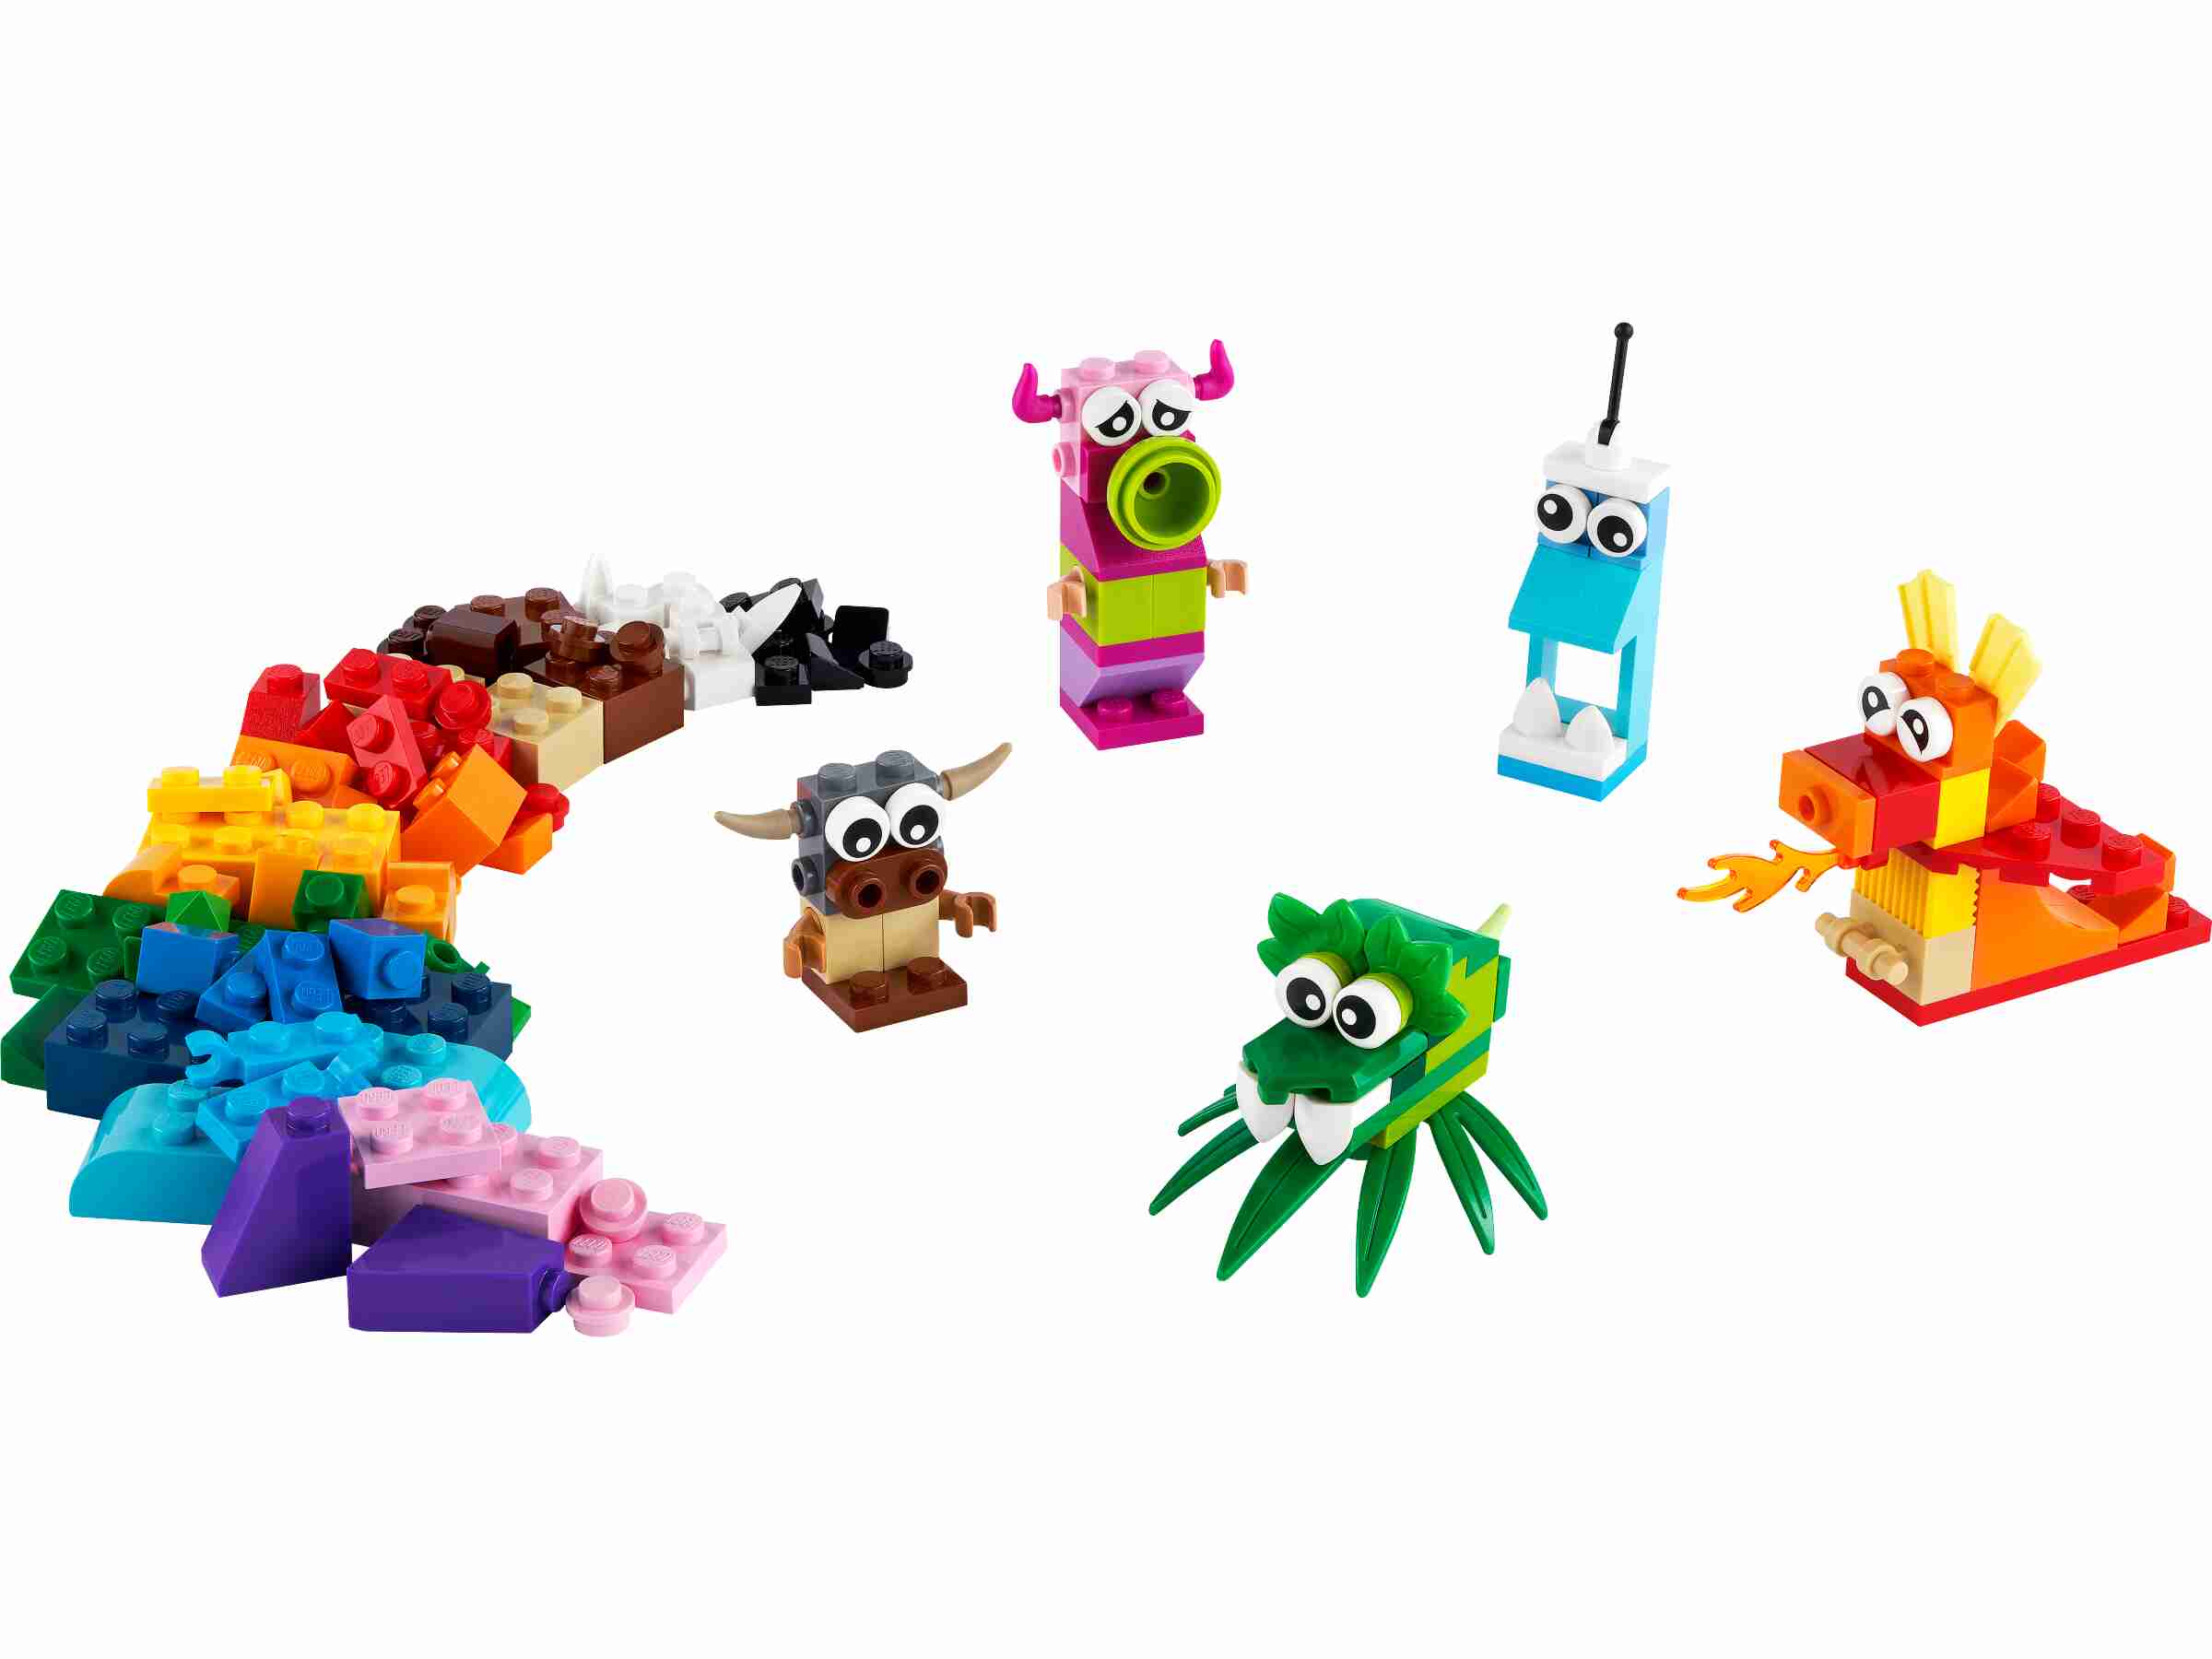 LEGO 11017 Classic Creative Monsters, 5 toy monster build ideas:  Lobigo.co.uk: Toys | Konstruktionsspielzeug